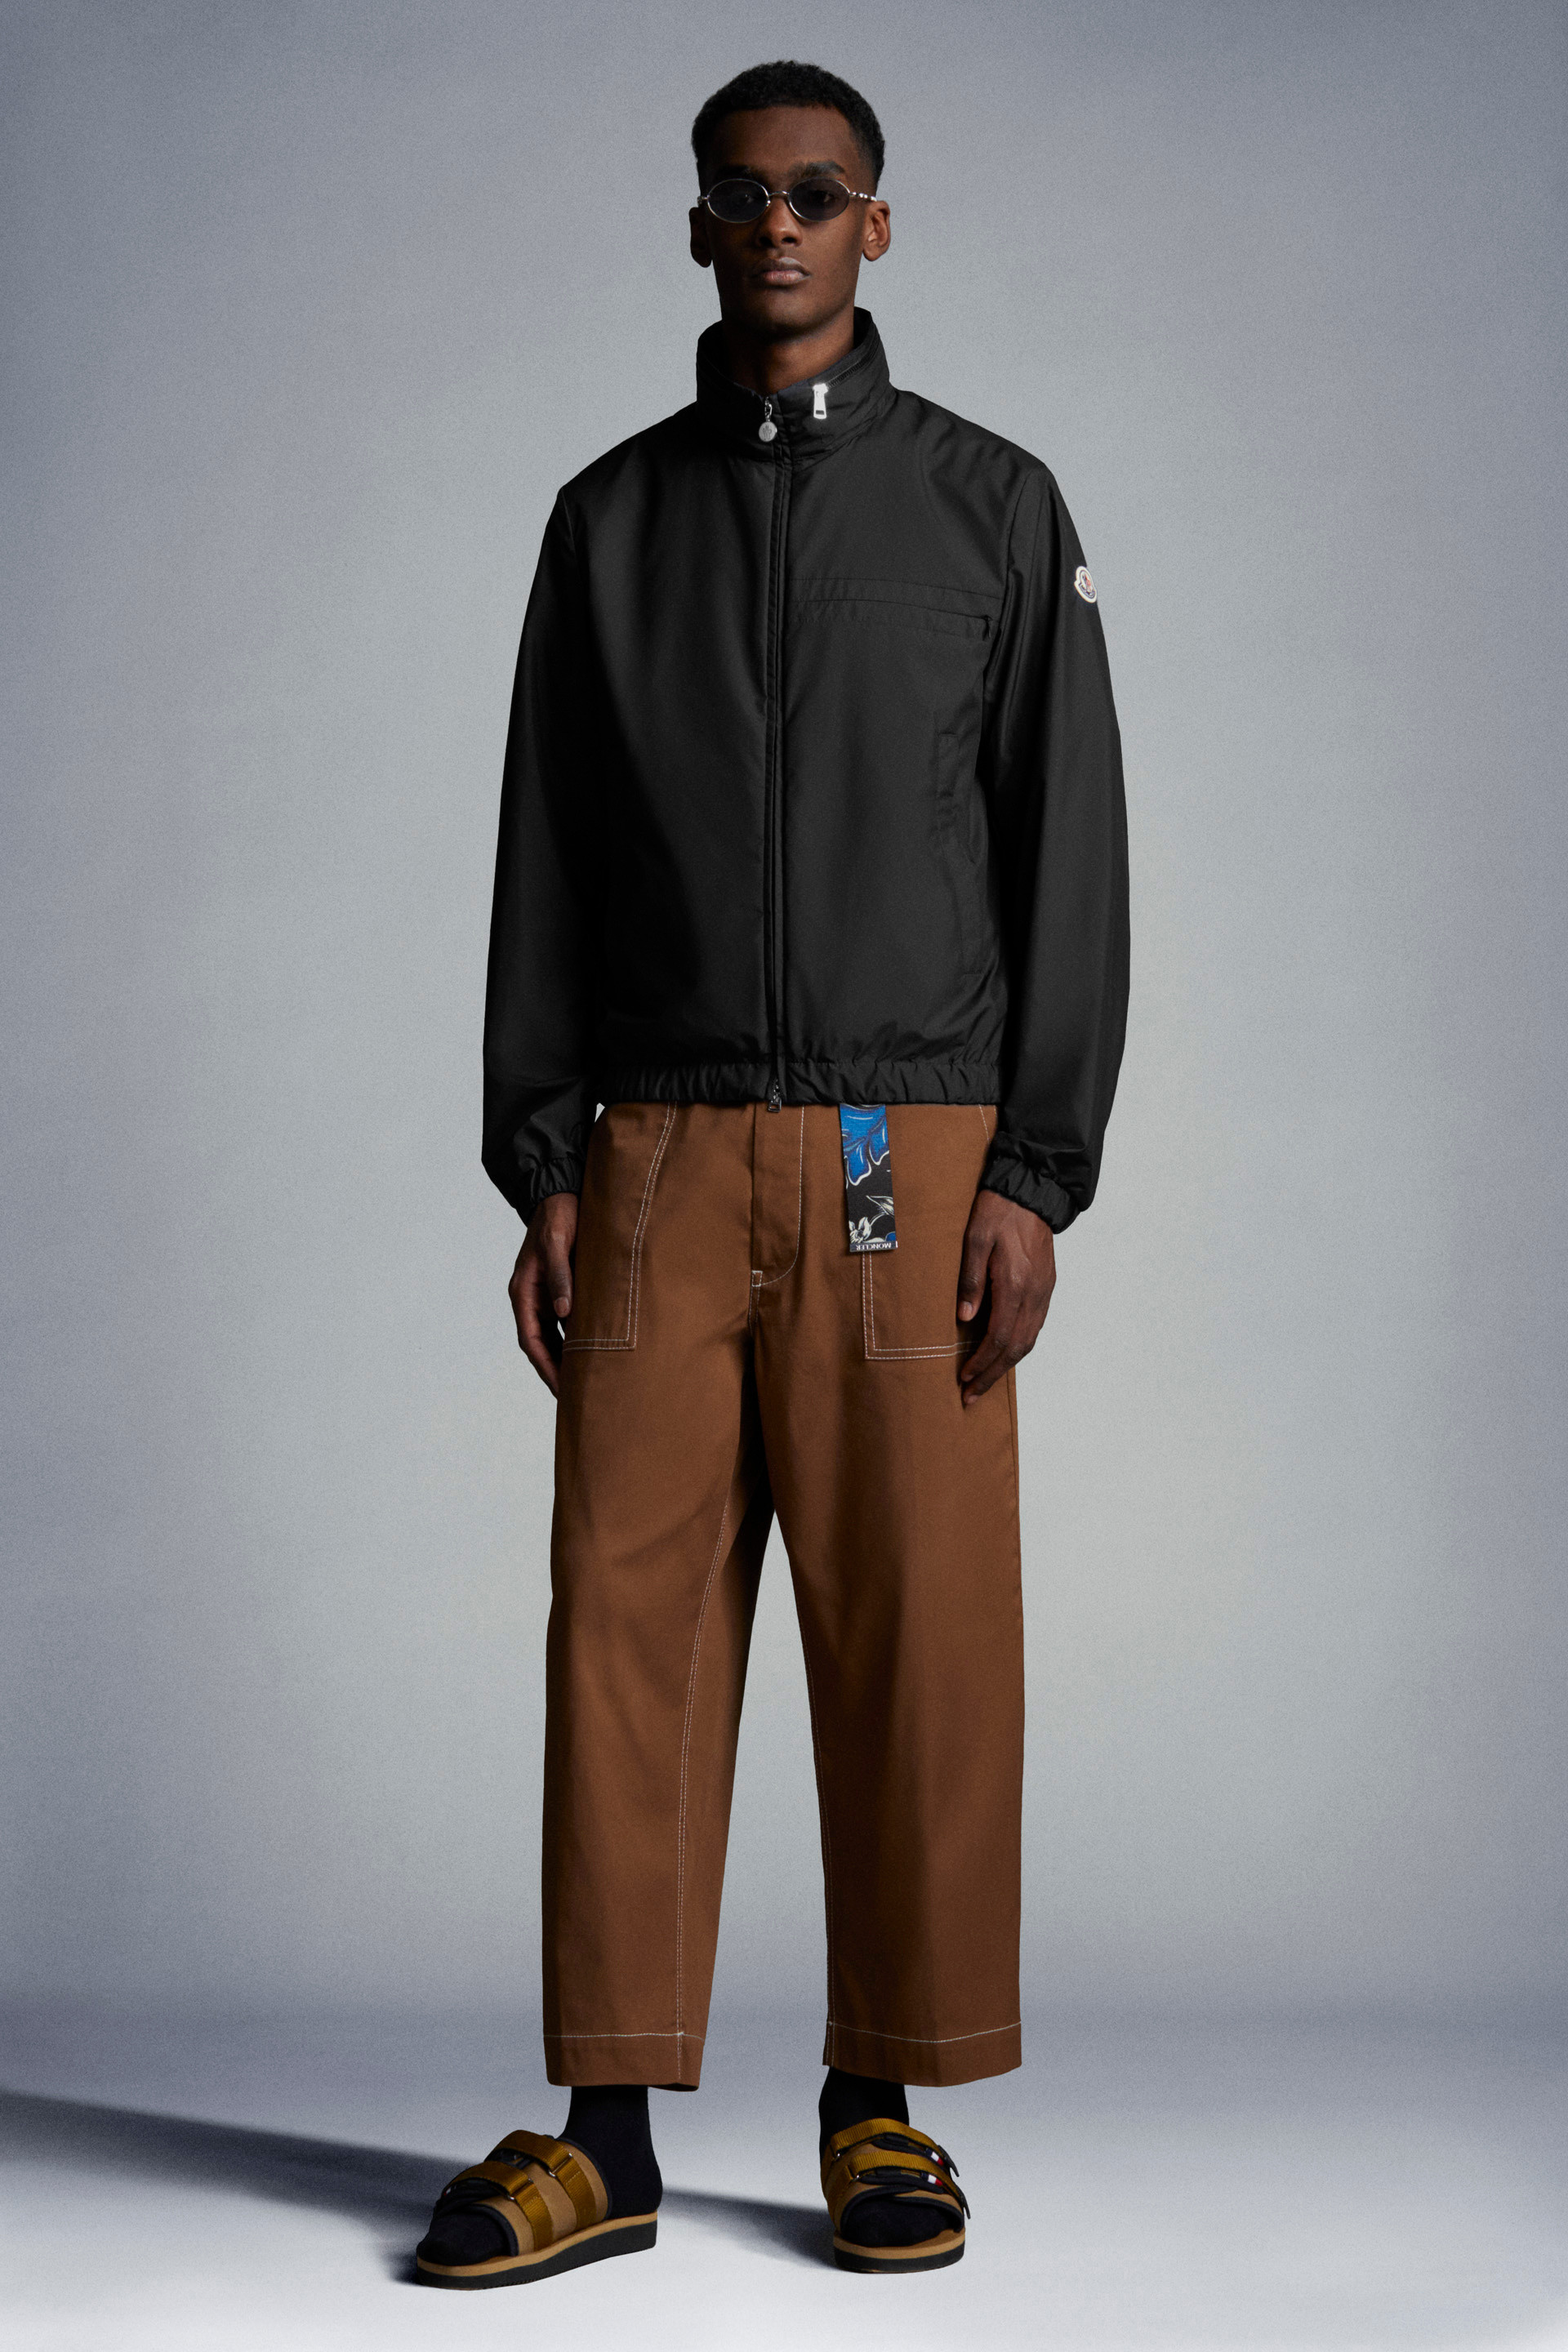 Jackets for Men - Outerwear | Moncler PL